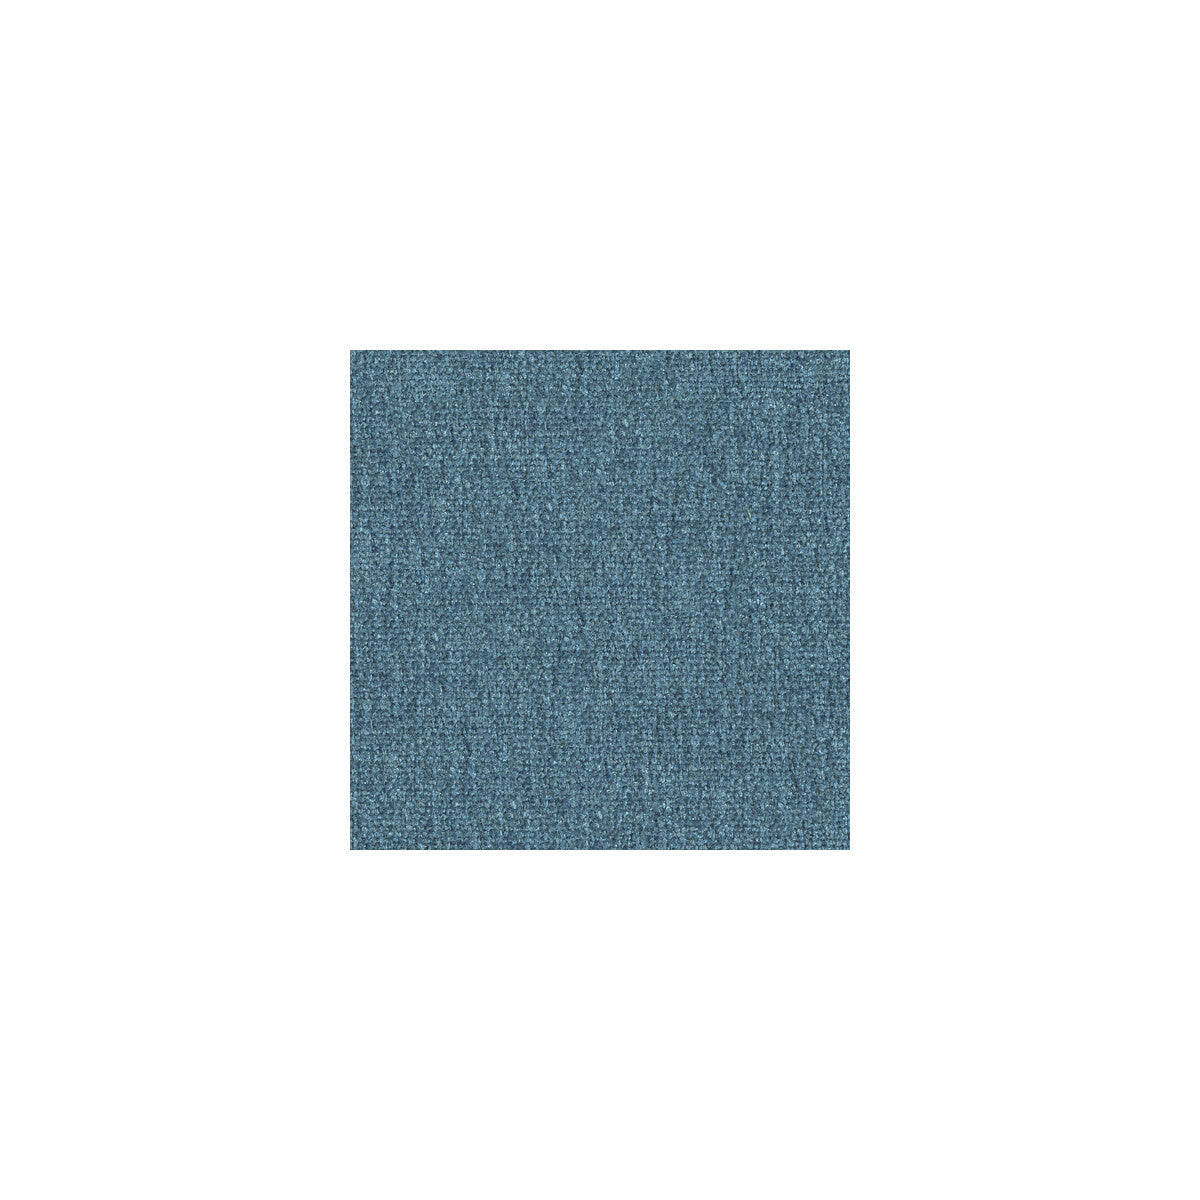 Kravet Smart fabric in 30992-5 color - pattern 30992.5.0 - by Kravet Smart